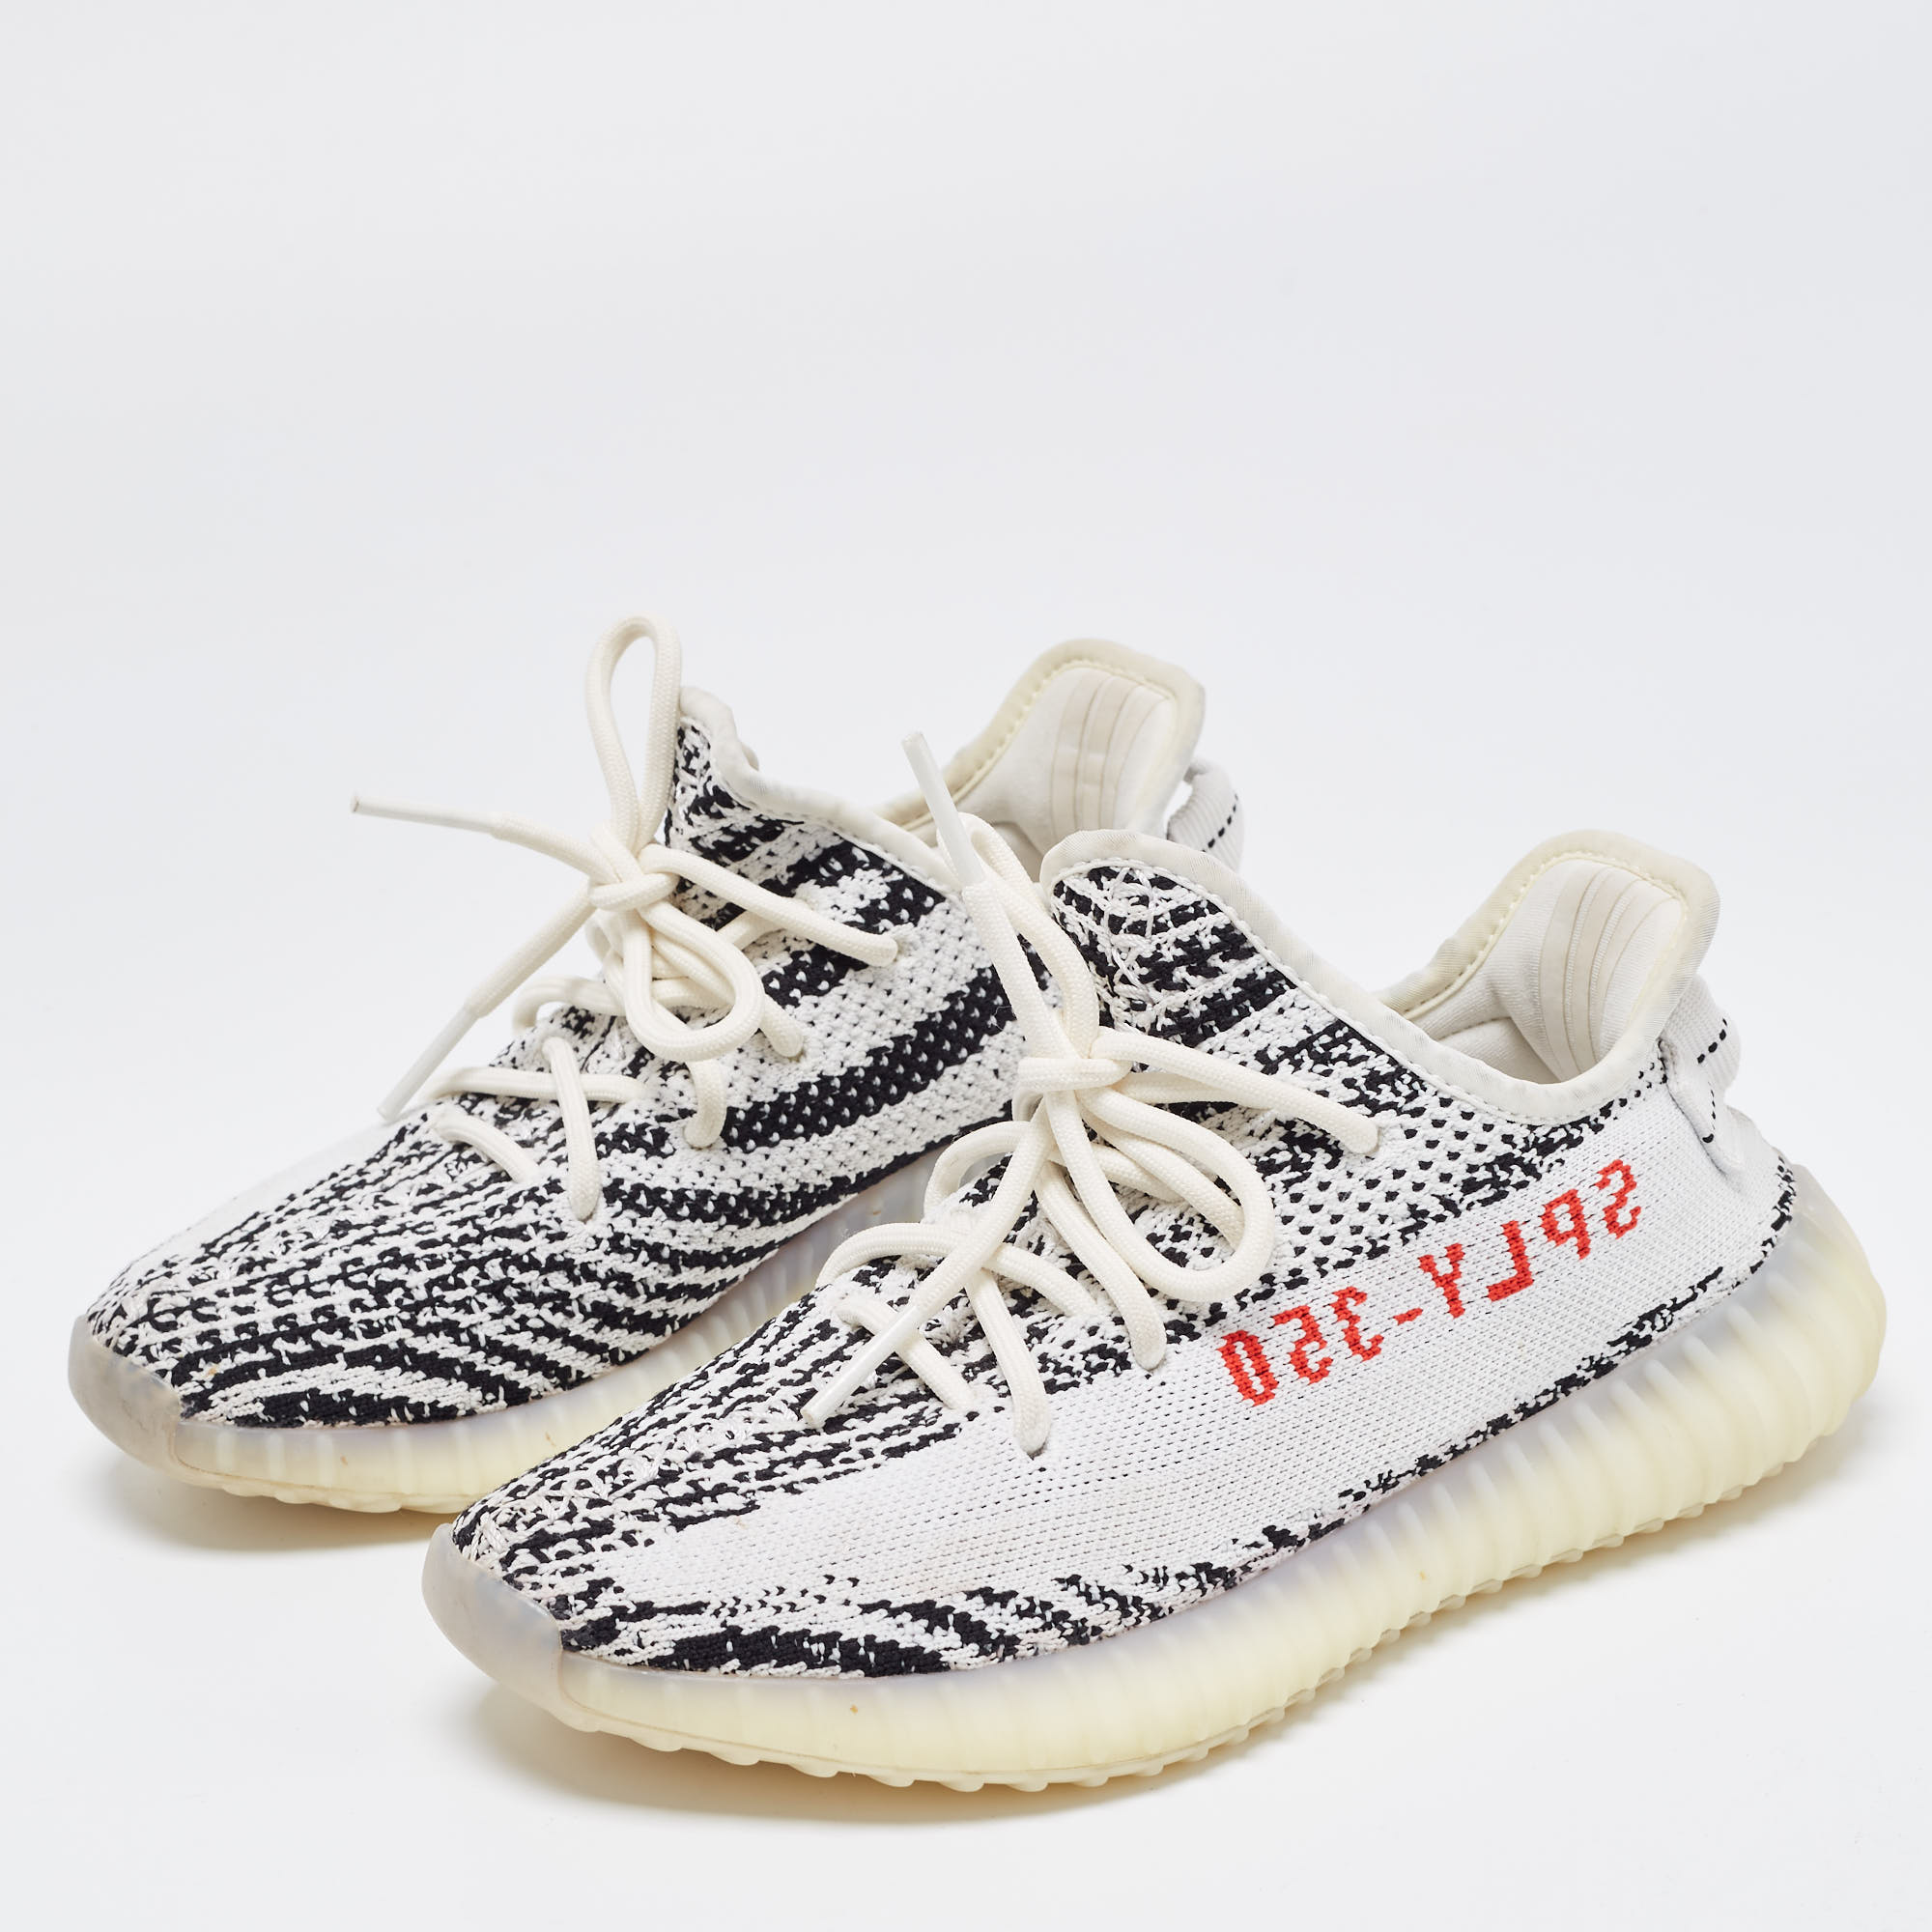 

Adidas x Yeezy White/Black Knit Fabric Boost 350 V2 'Zebra' Sneakers Size 37 1/3